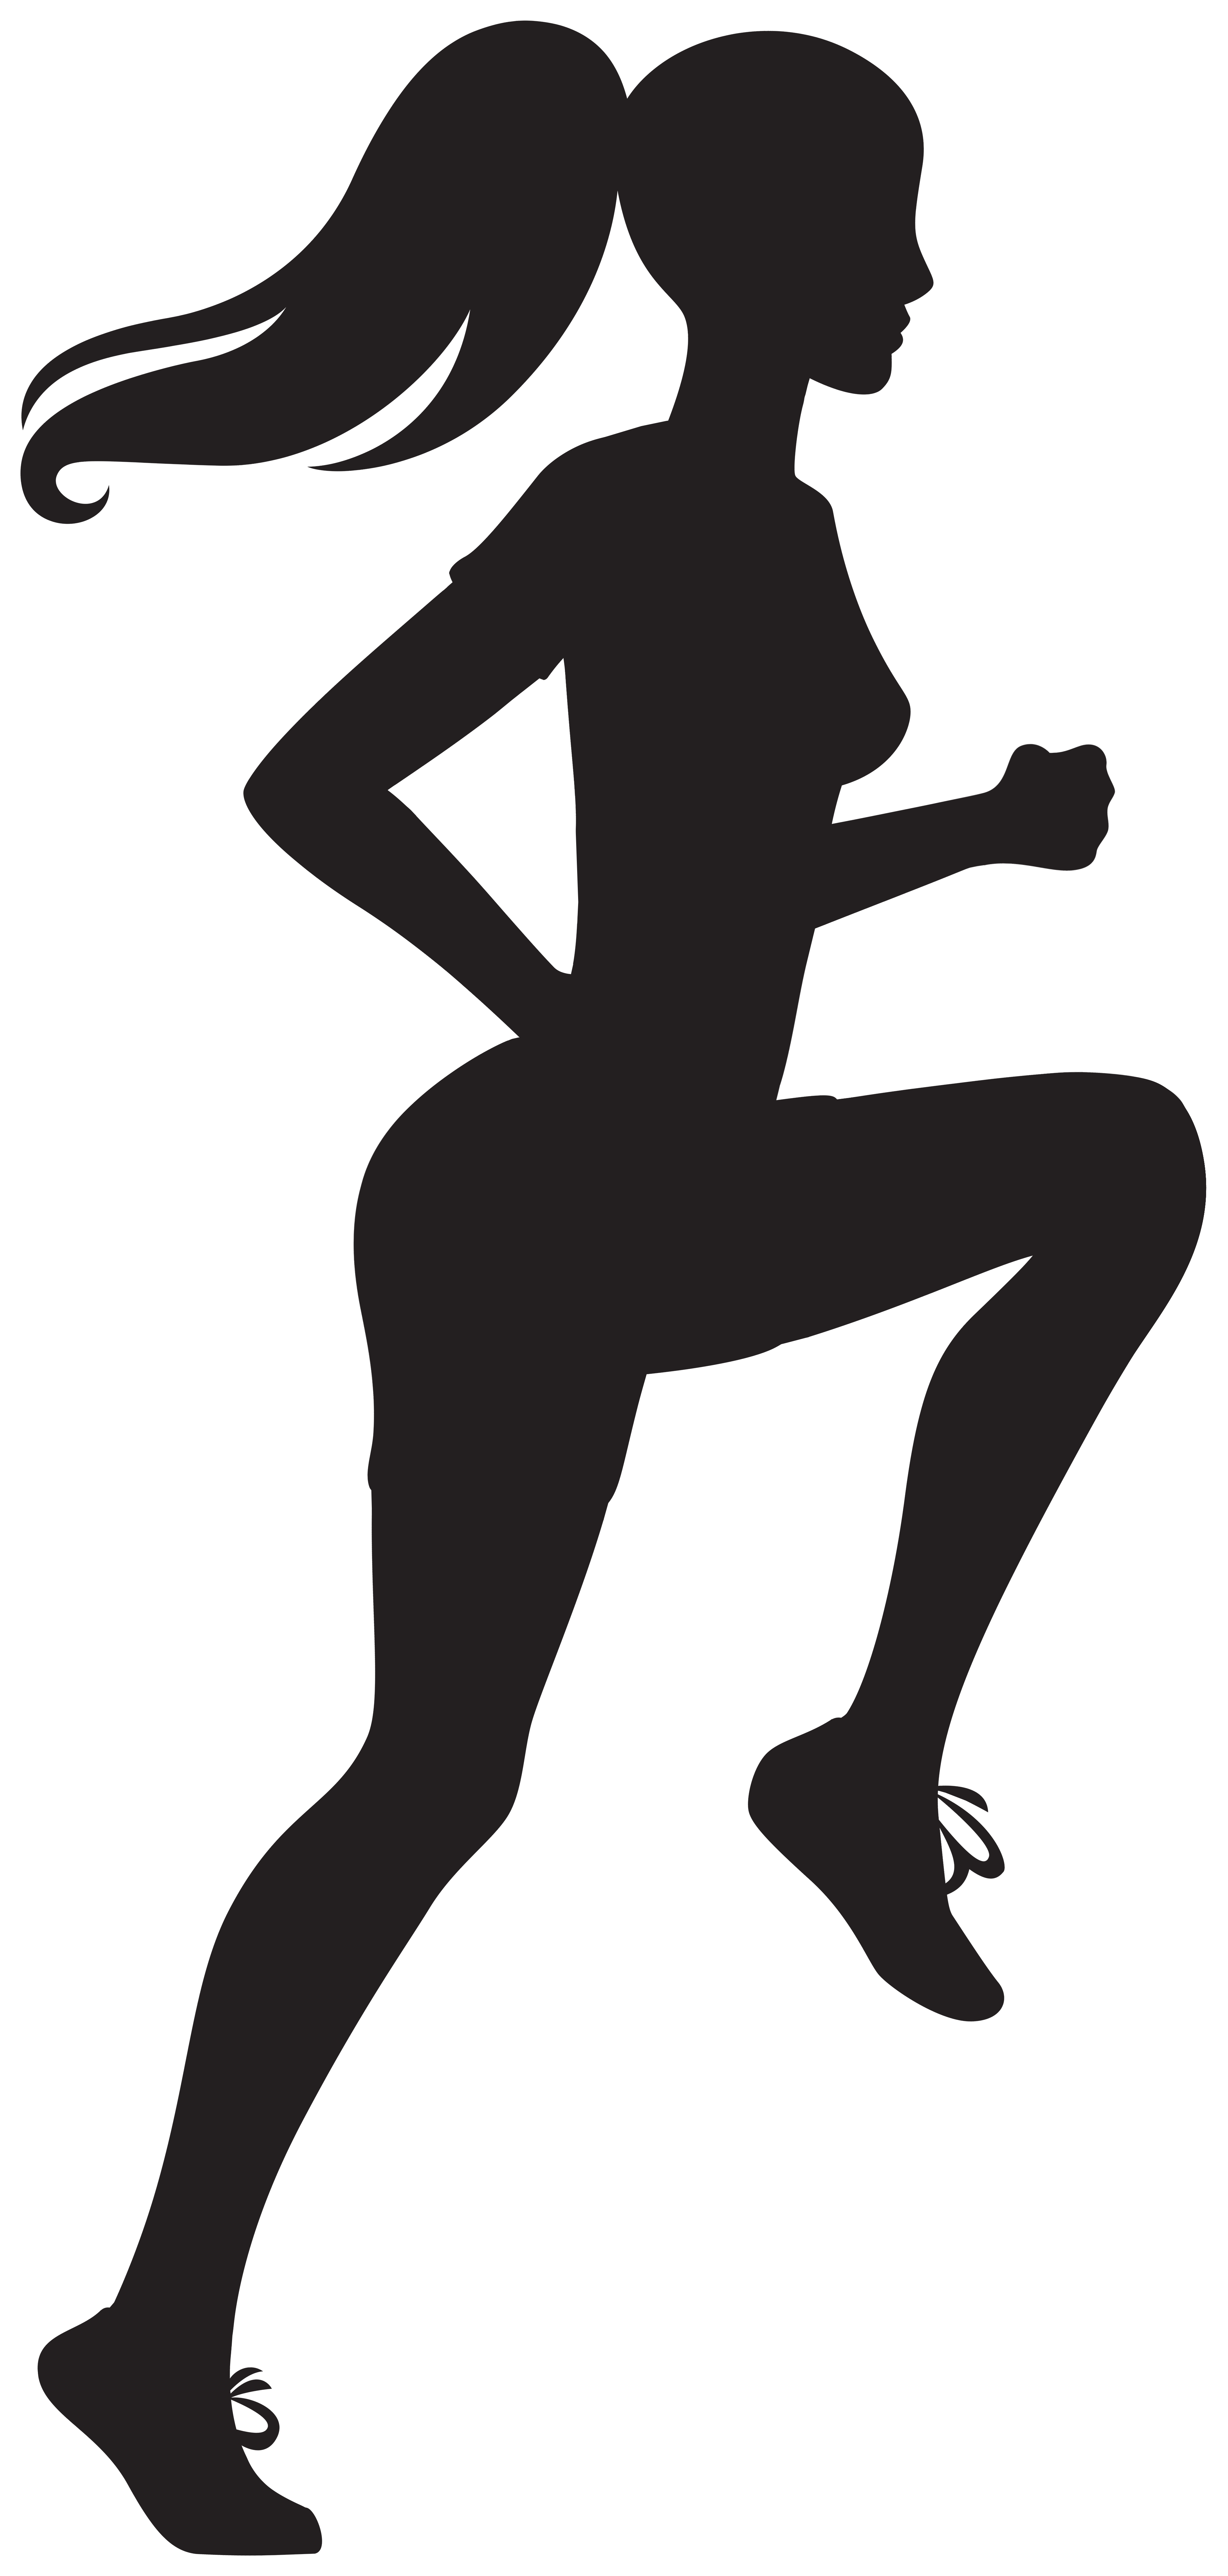 Running woman silhouette.